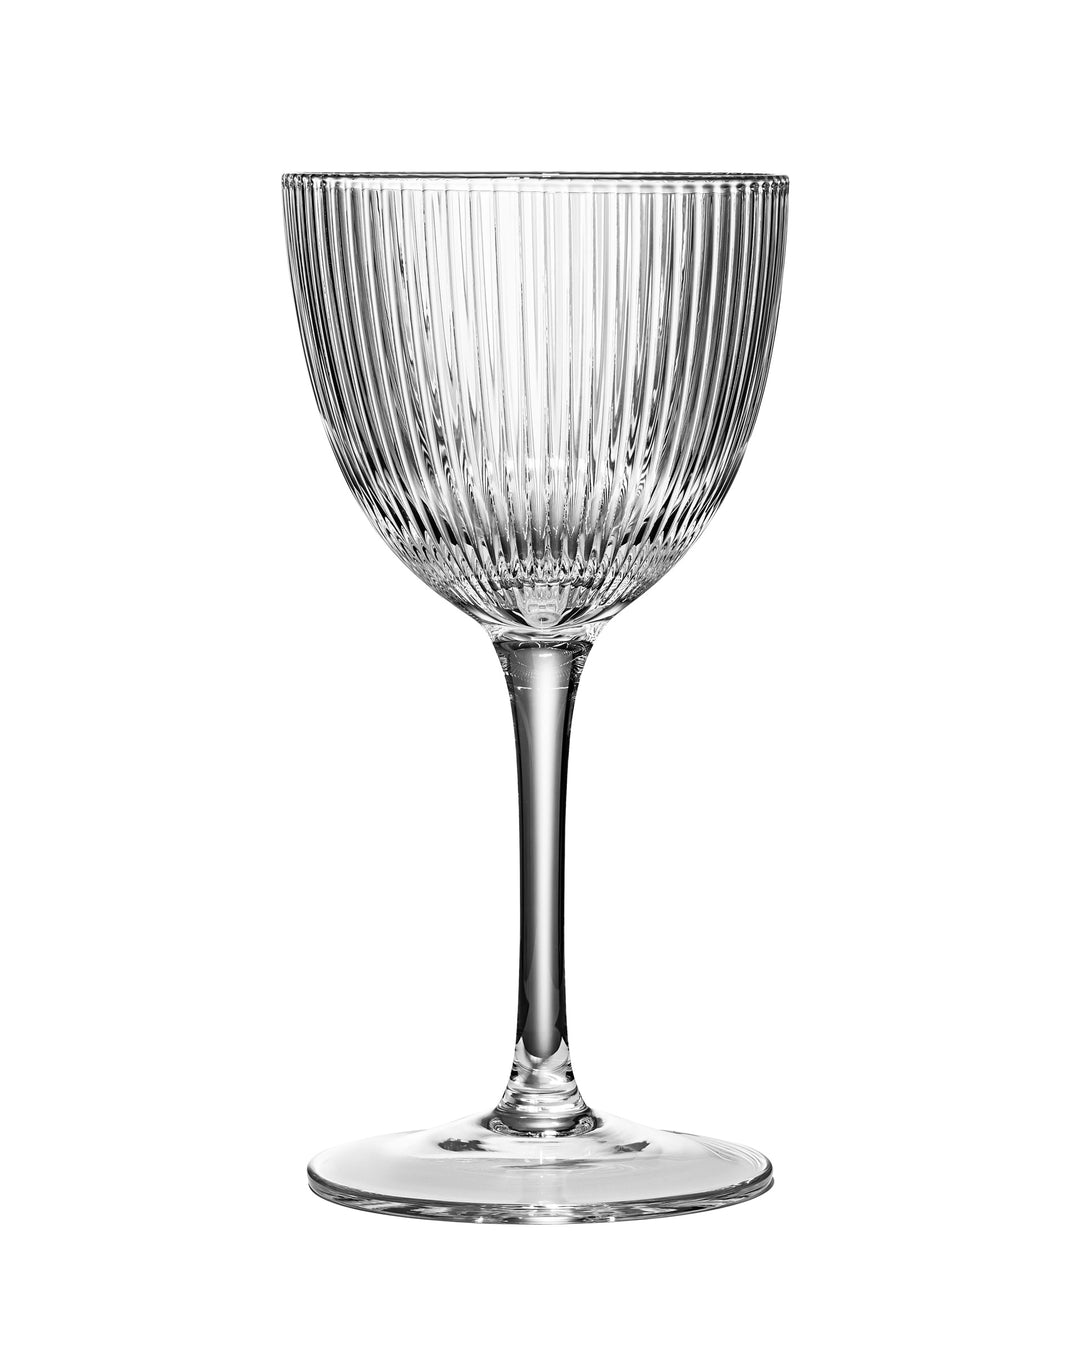 Crystal 5 oz Retro Nick and Nora Coupe Glasses | Set of 6 | Vintage Bar  Glassware for Martini, Manha…See more Crystal 5 oz Retro Nick and Nora  Coupe